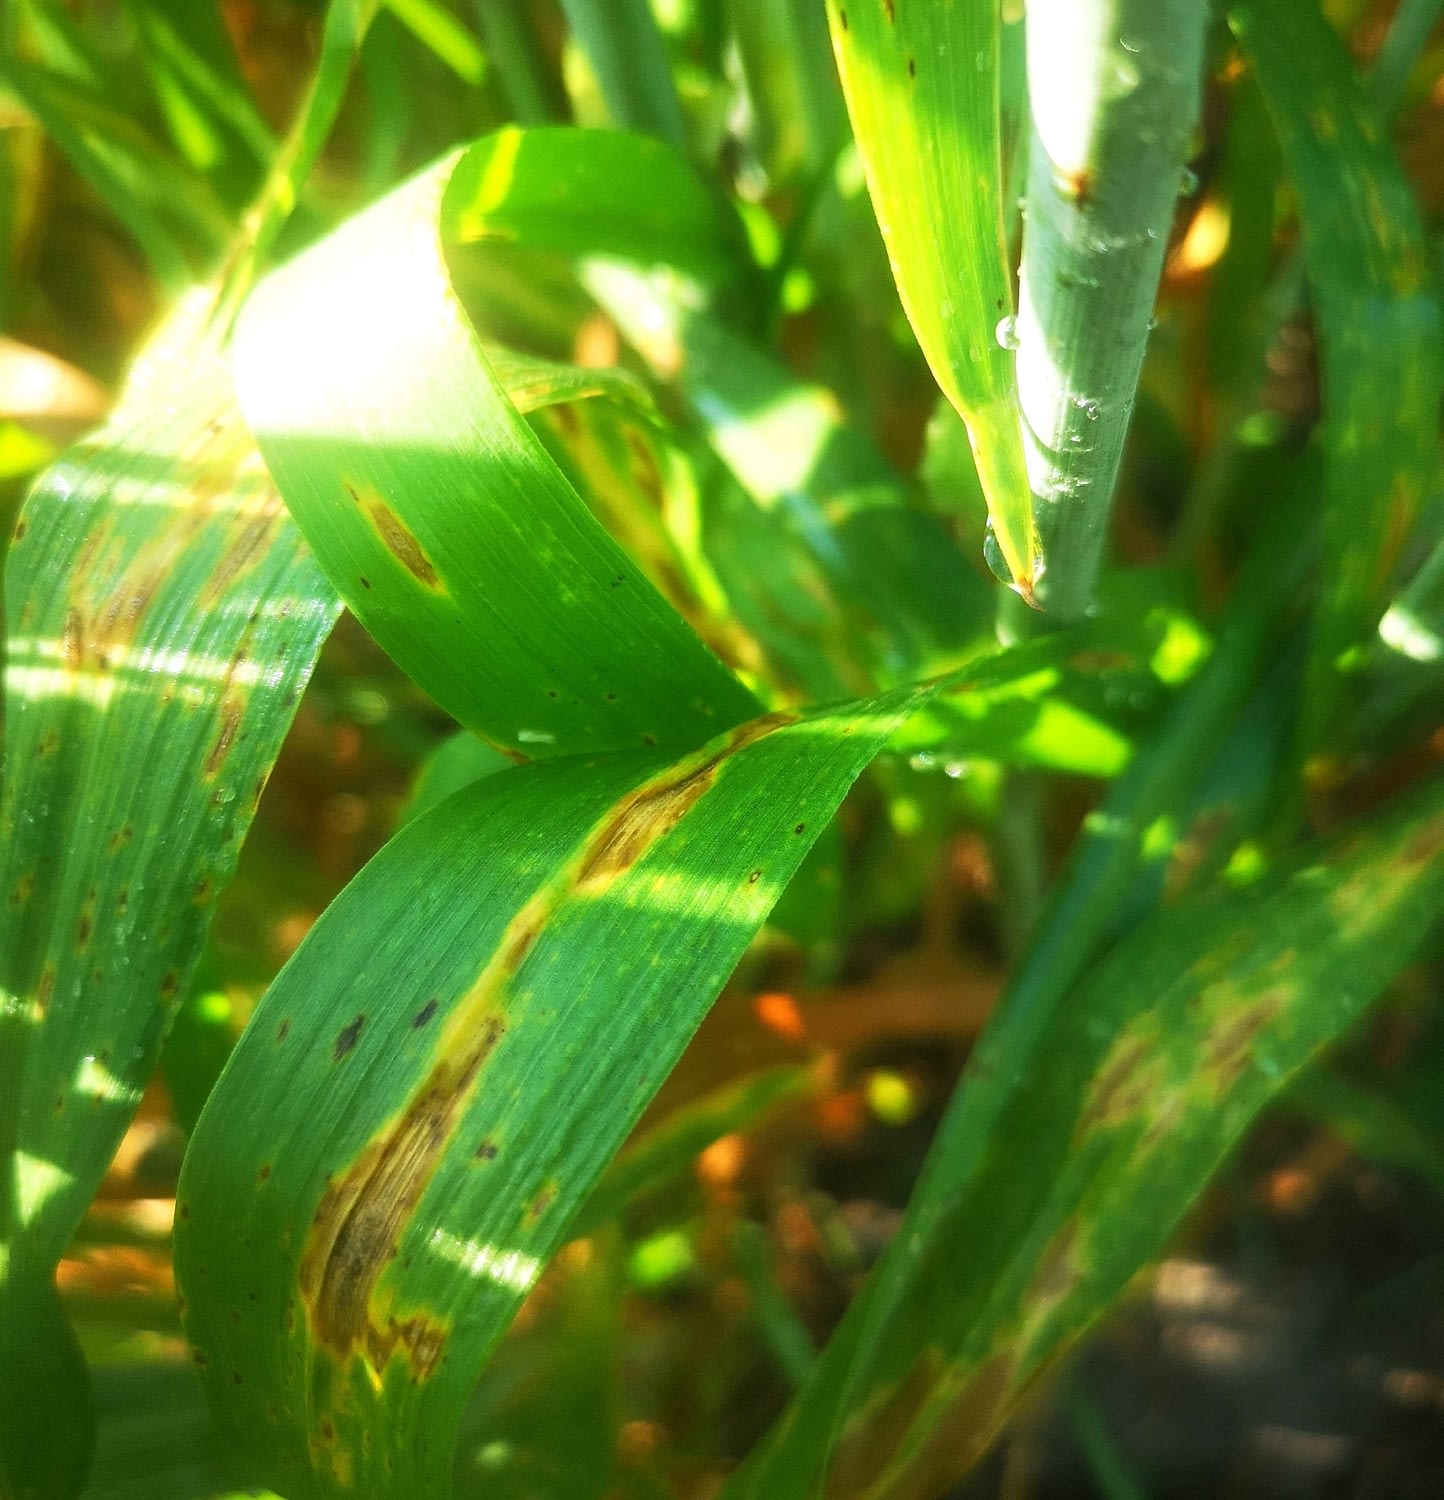 Signs of spot blotch on wheat. (Photo: Philomin Juliana/CIMMYT)